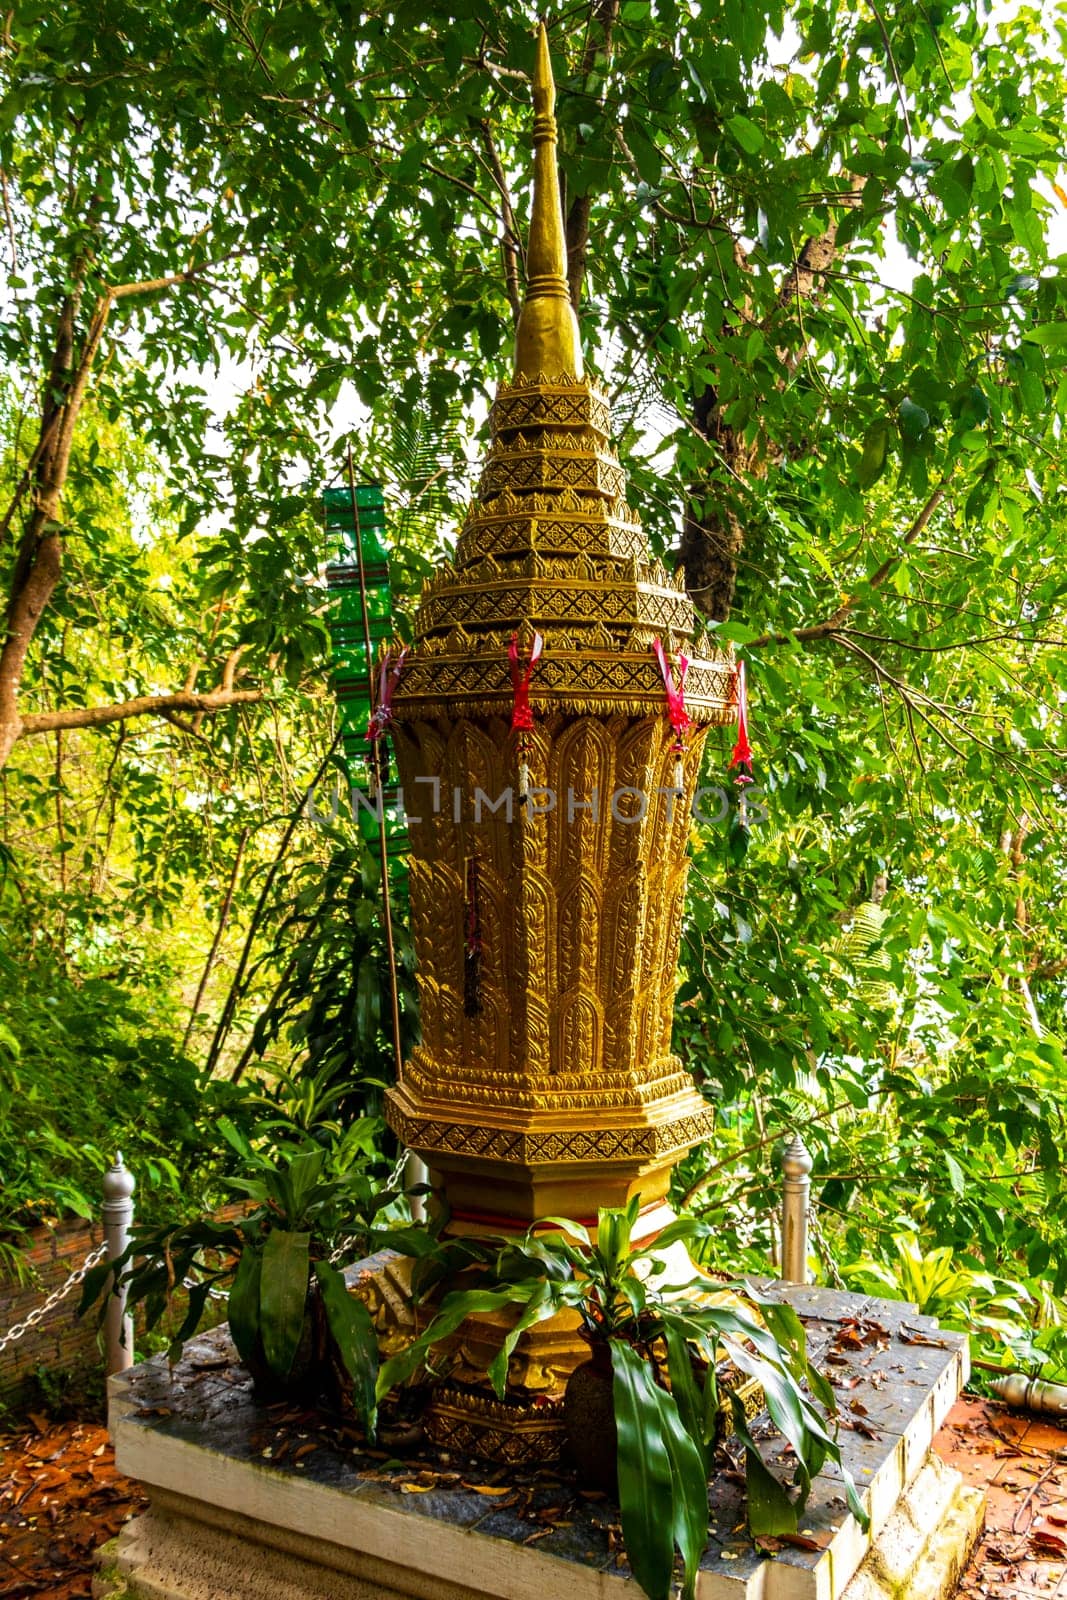 Golden Wat Phra That Doi Suthep temple temples Chiang Mai Thailand. by Arkadij